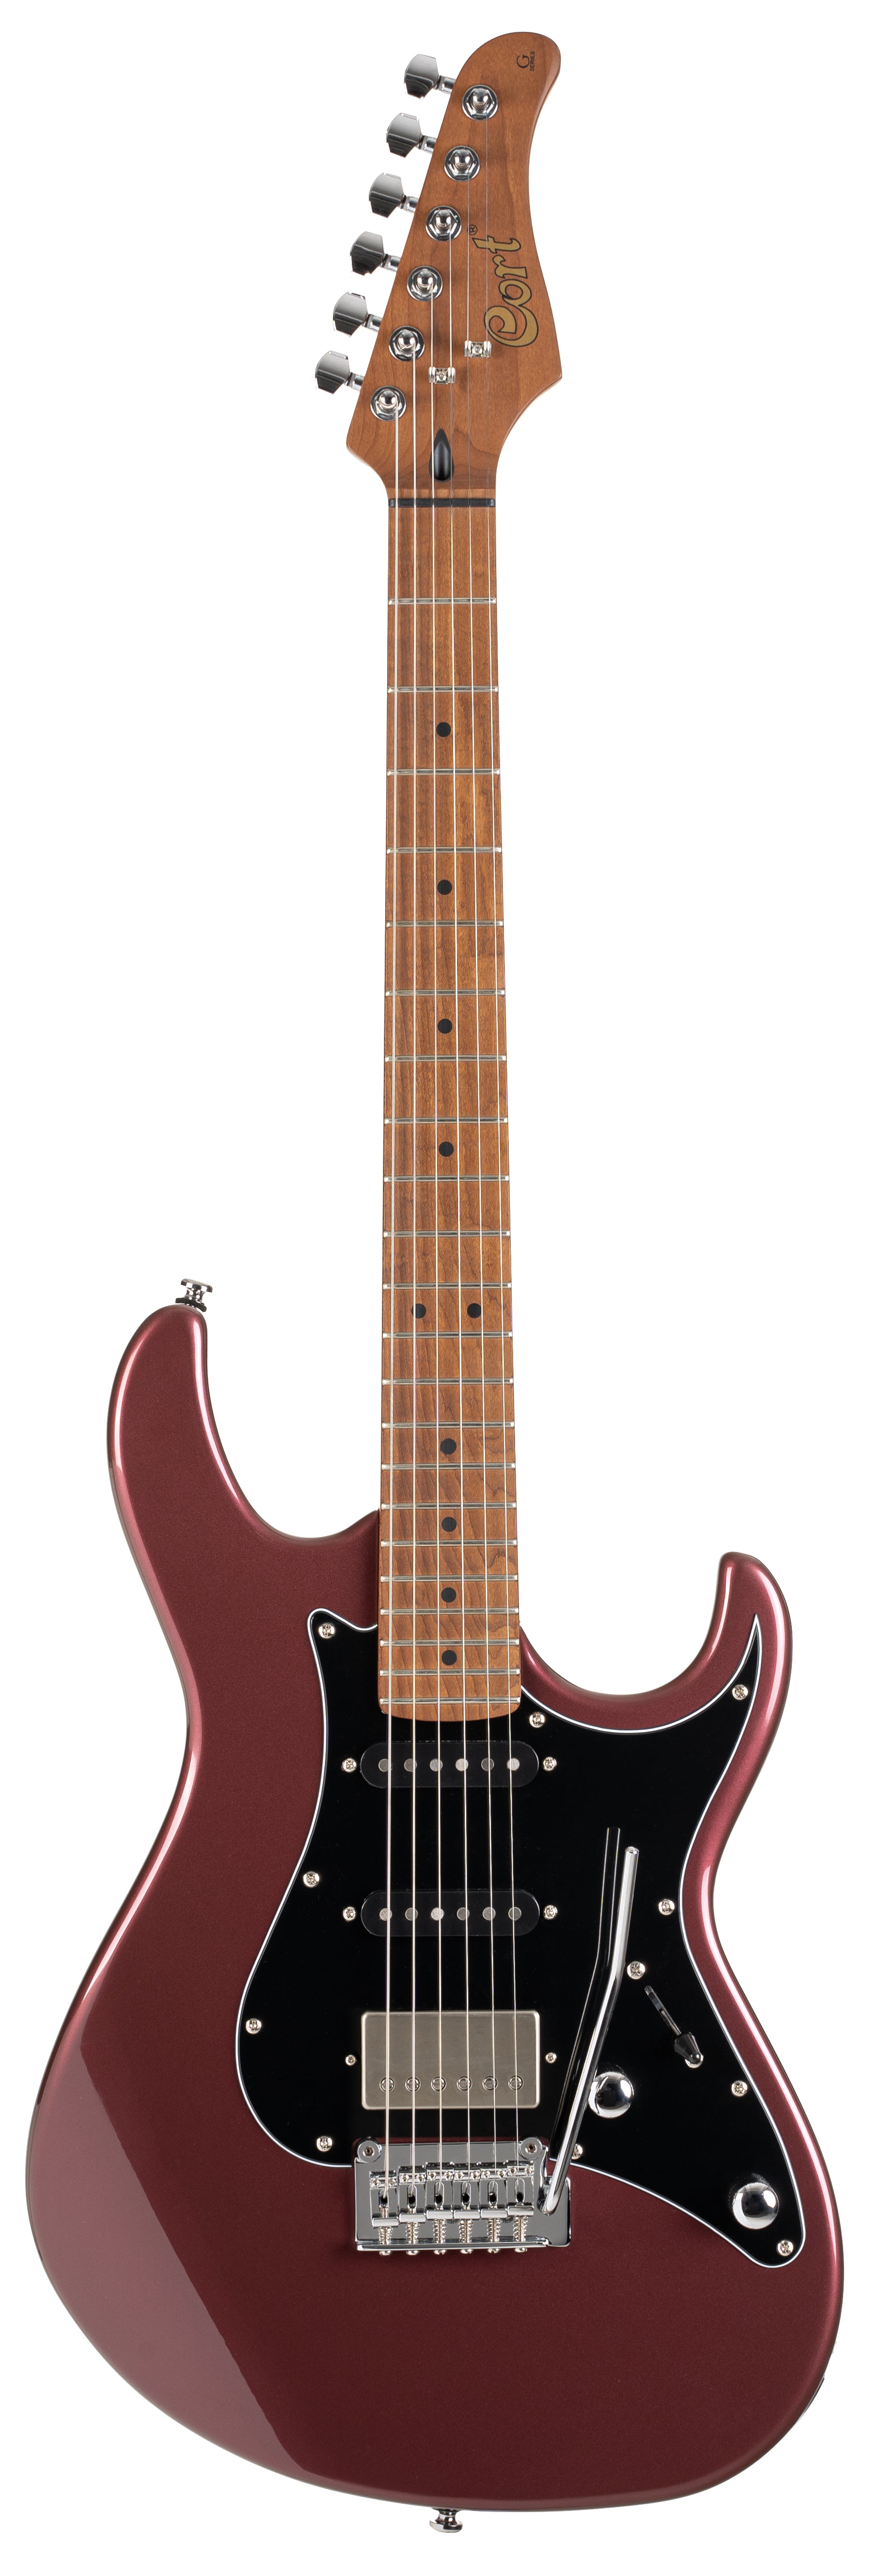 Cort G250 SE Vivid Burgundy, Electric Guitar for sale at Richards Guitars.